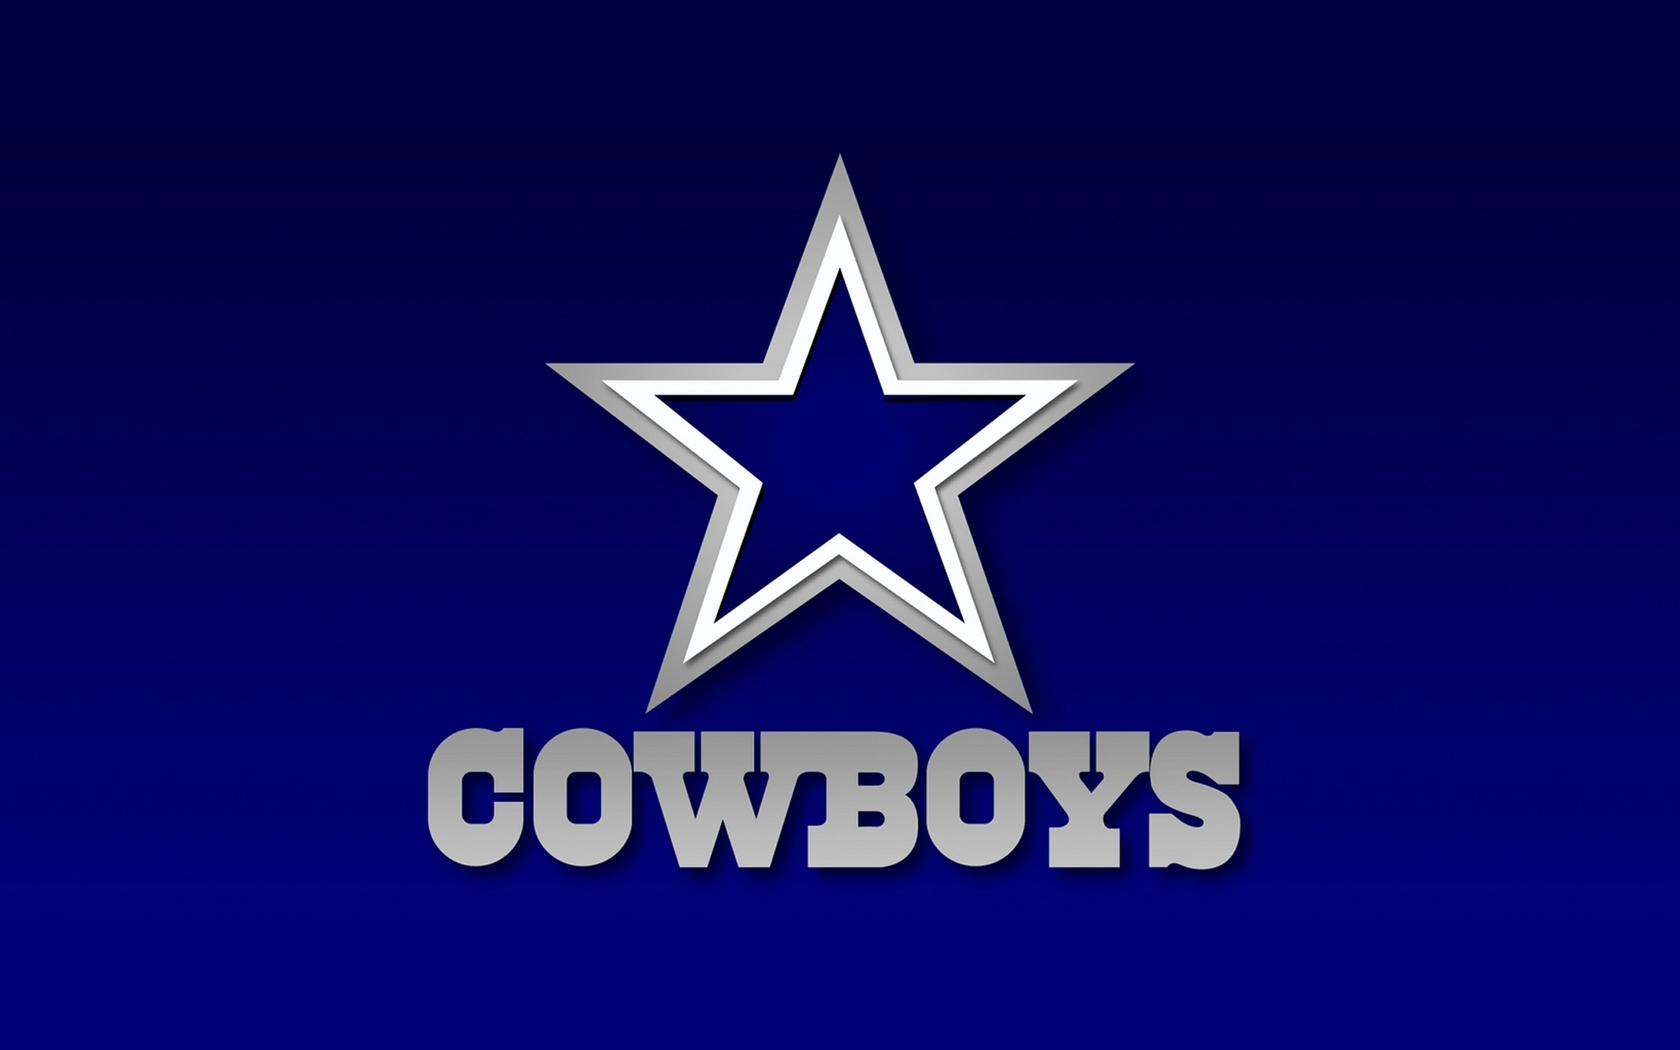 Free Dallas Cowboys background image Dallas Cowboys wallpapers 1680x1050